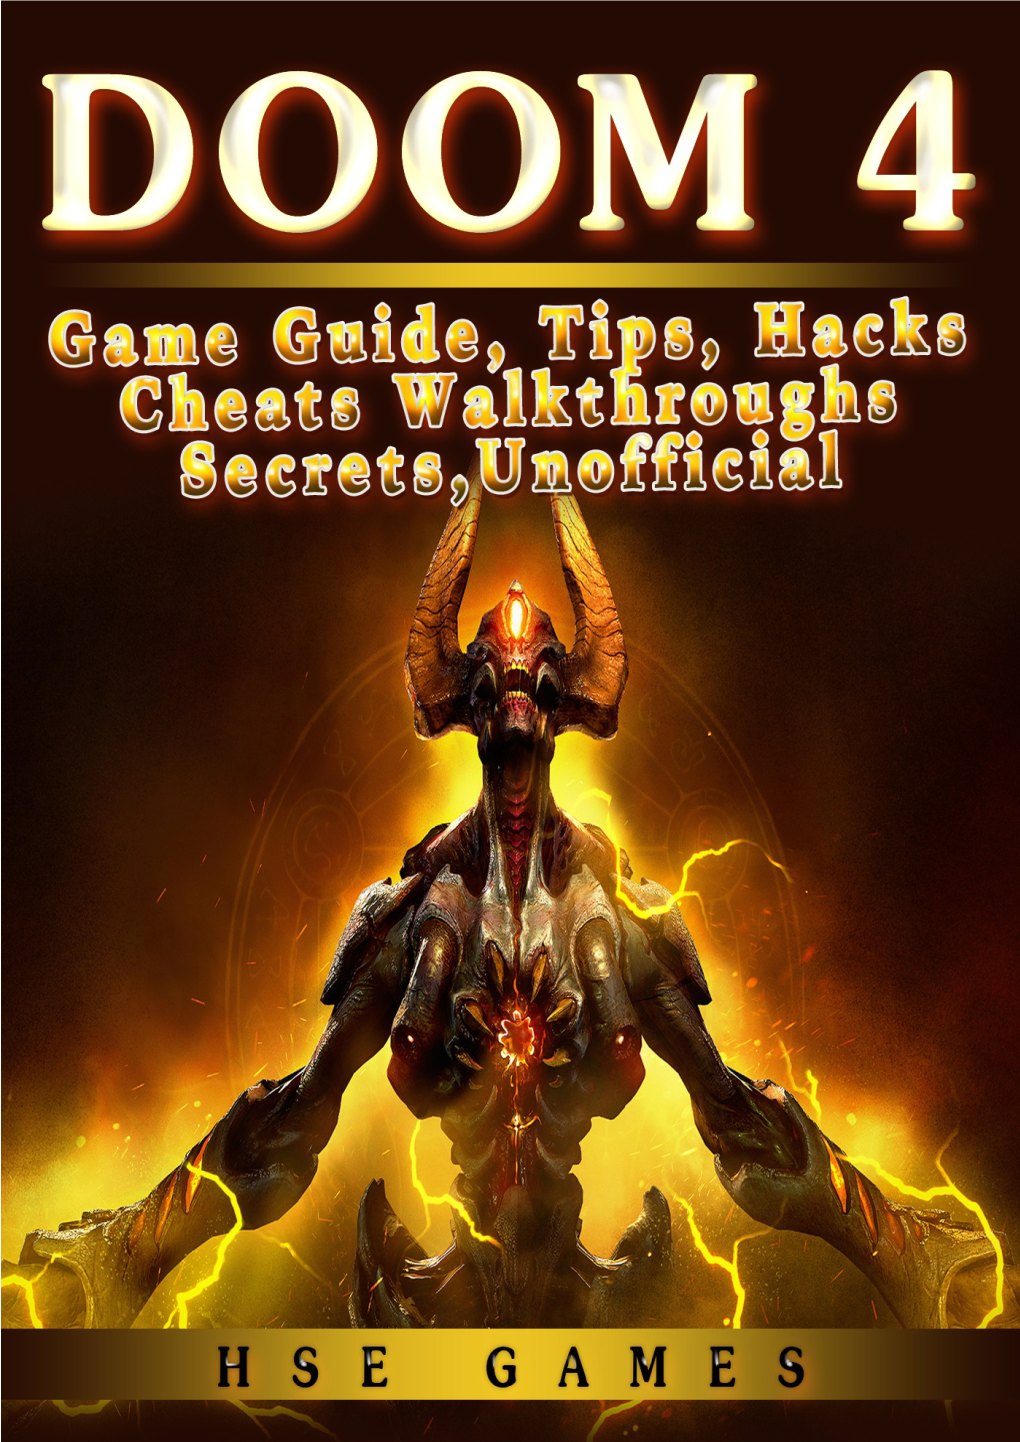 Doom 4 Game Guide, Tips, Hacks Cheats Walkthroughs Secrets, Unofficial